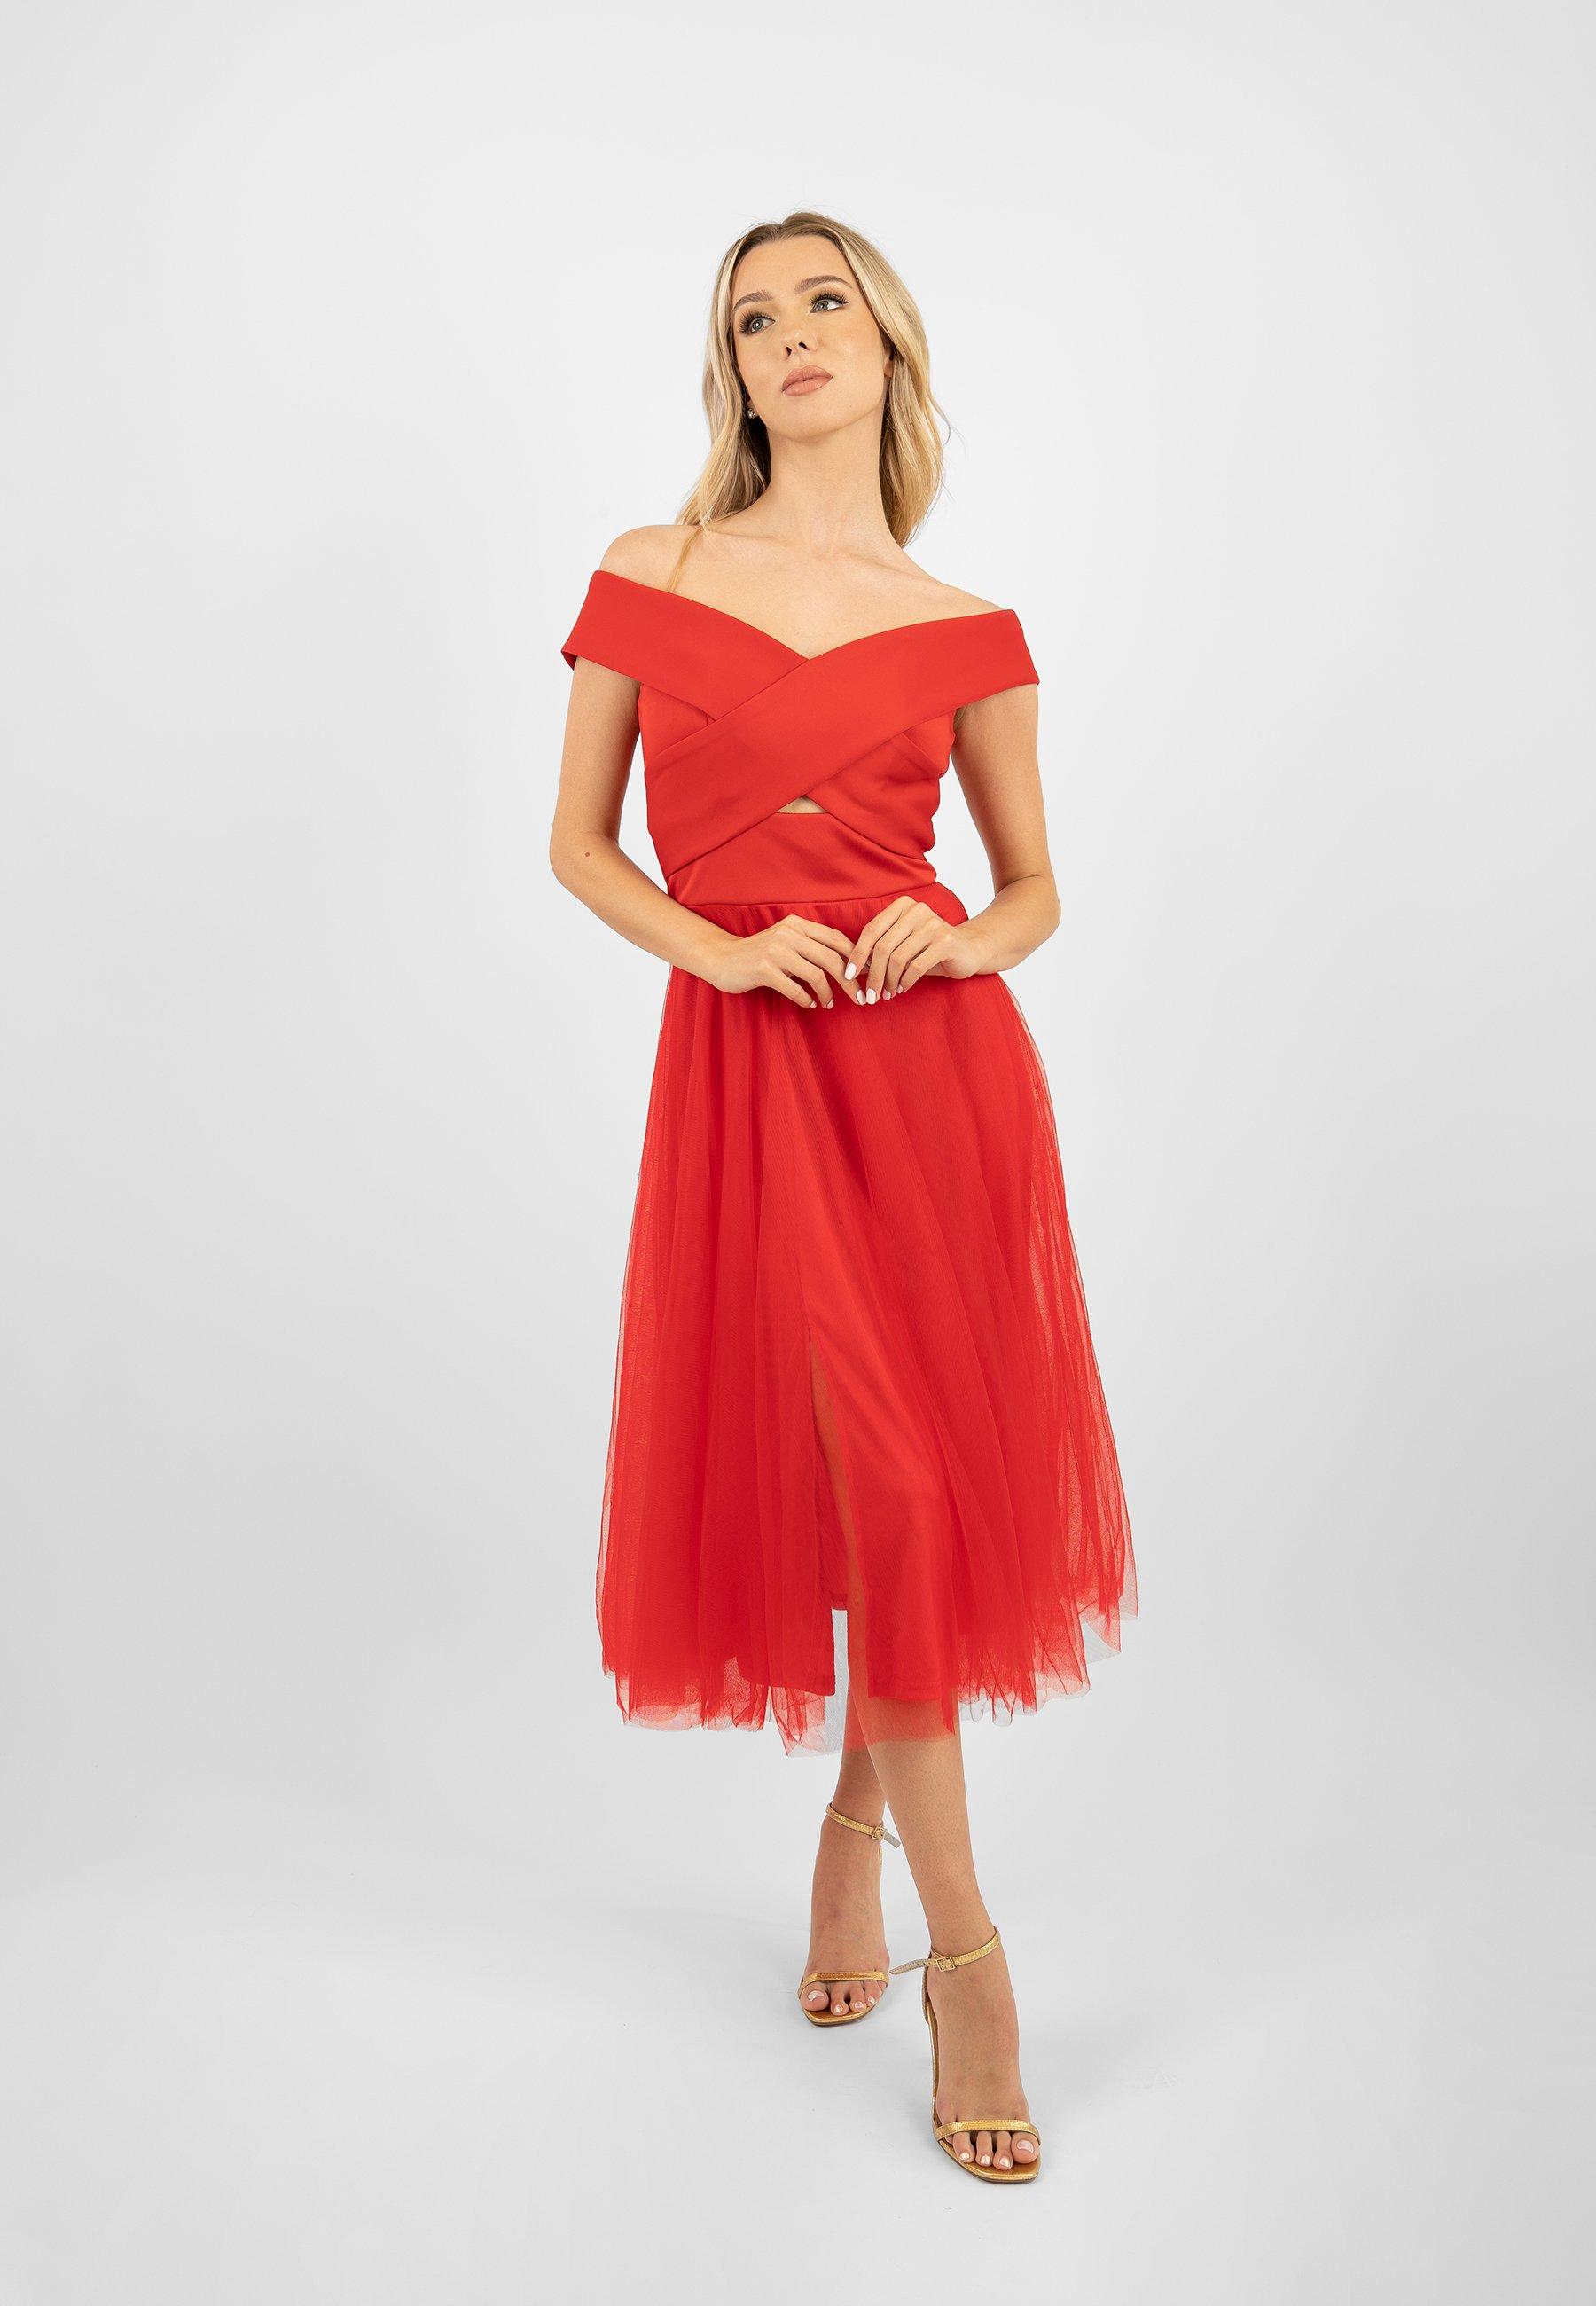 Красное платье-миди из тюля с разрезом Skirt and Stiletto, красный длинное платье с вырезом бардо the are мультиколор